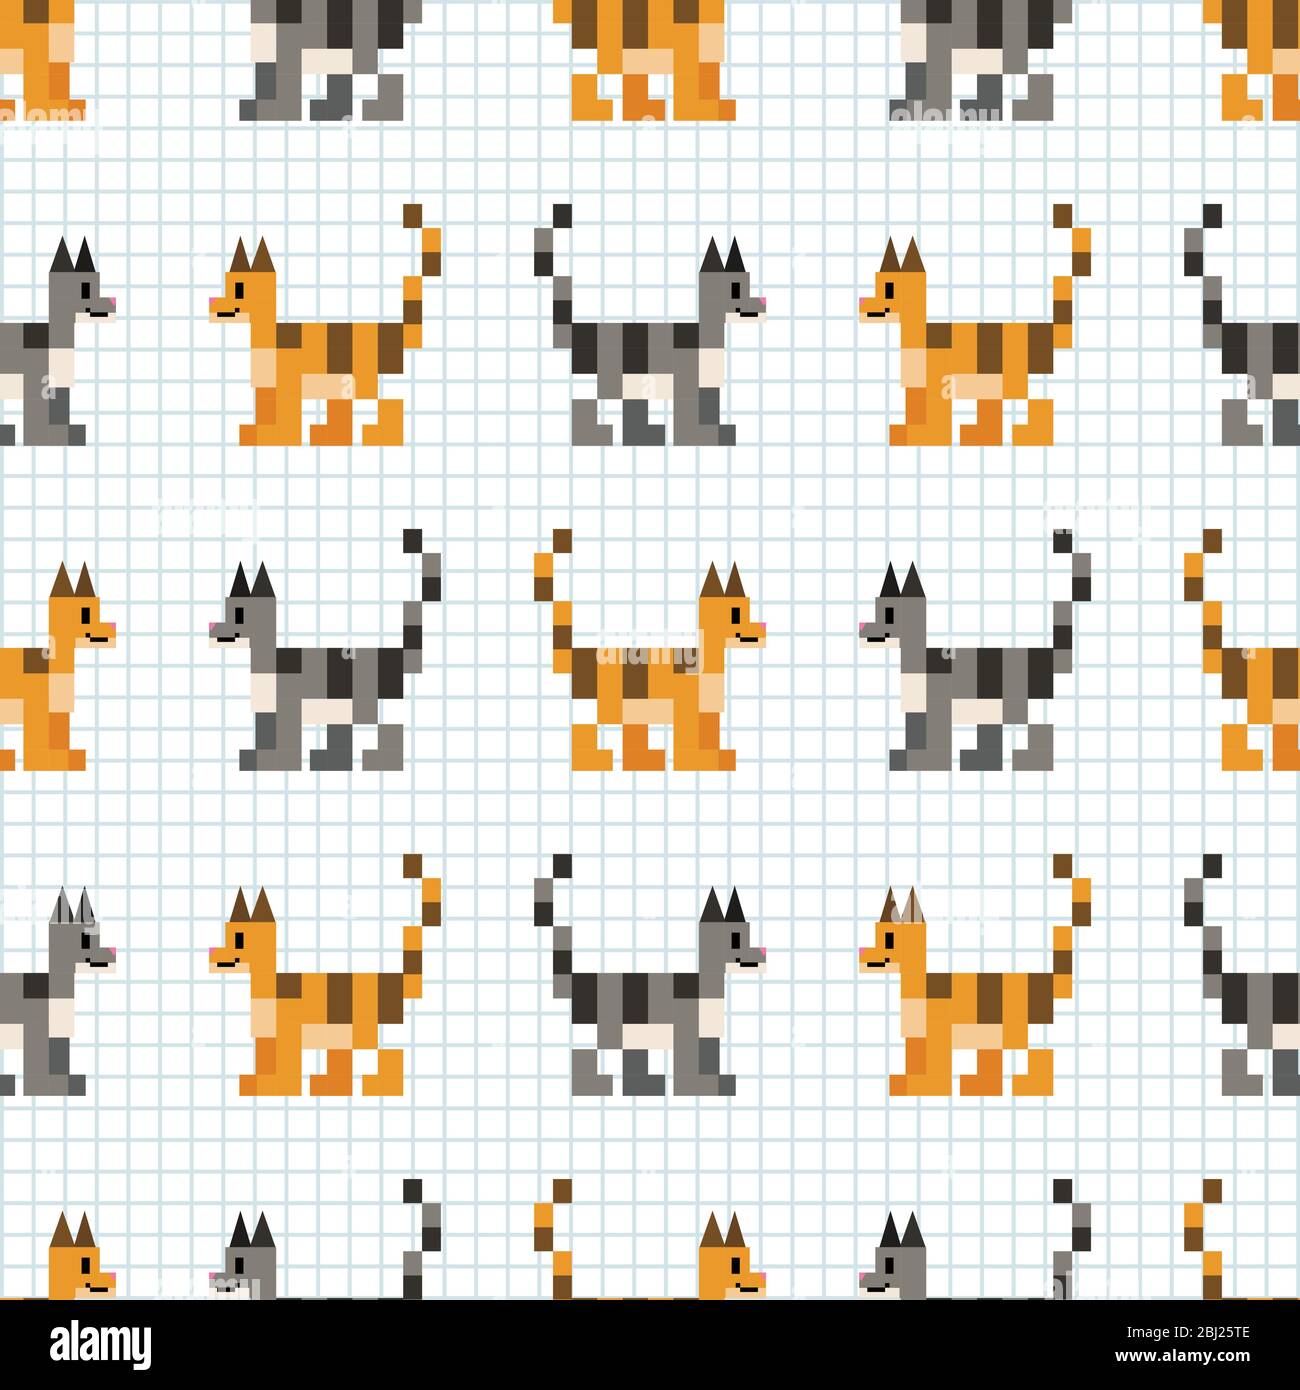 Cute Cartoon 8bit Pet Grey And Orange Tabby Cat Seamless Vector Pattern Kawaii Pixel Art Kitty Pet Domestic Kitten Video Game Illustration All Over Stock Vector Image Art Alamy